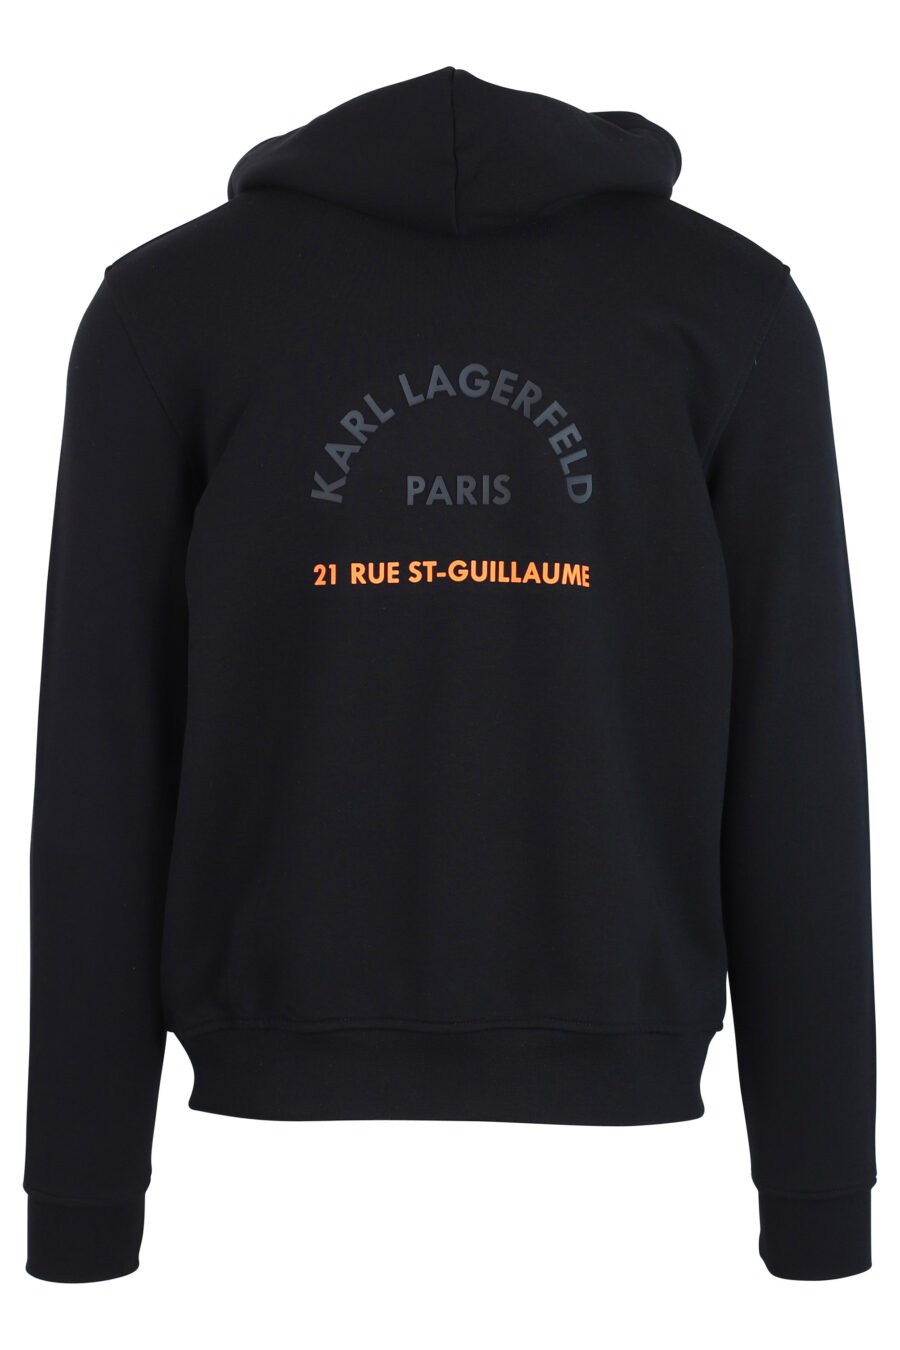 Schwarzes Kapuzensweatshirt mit orangefarbenem "rue st guillaume"-Logo - IMG 0795